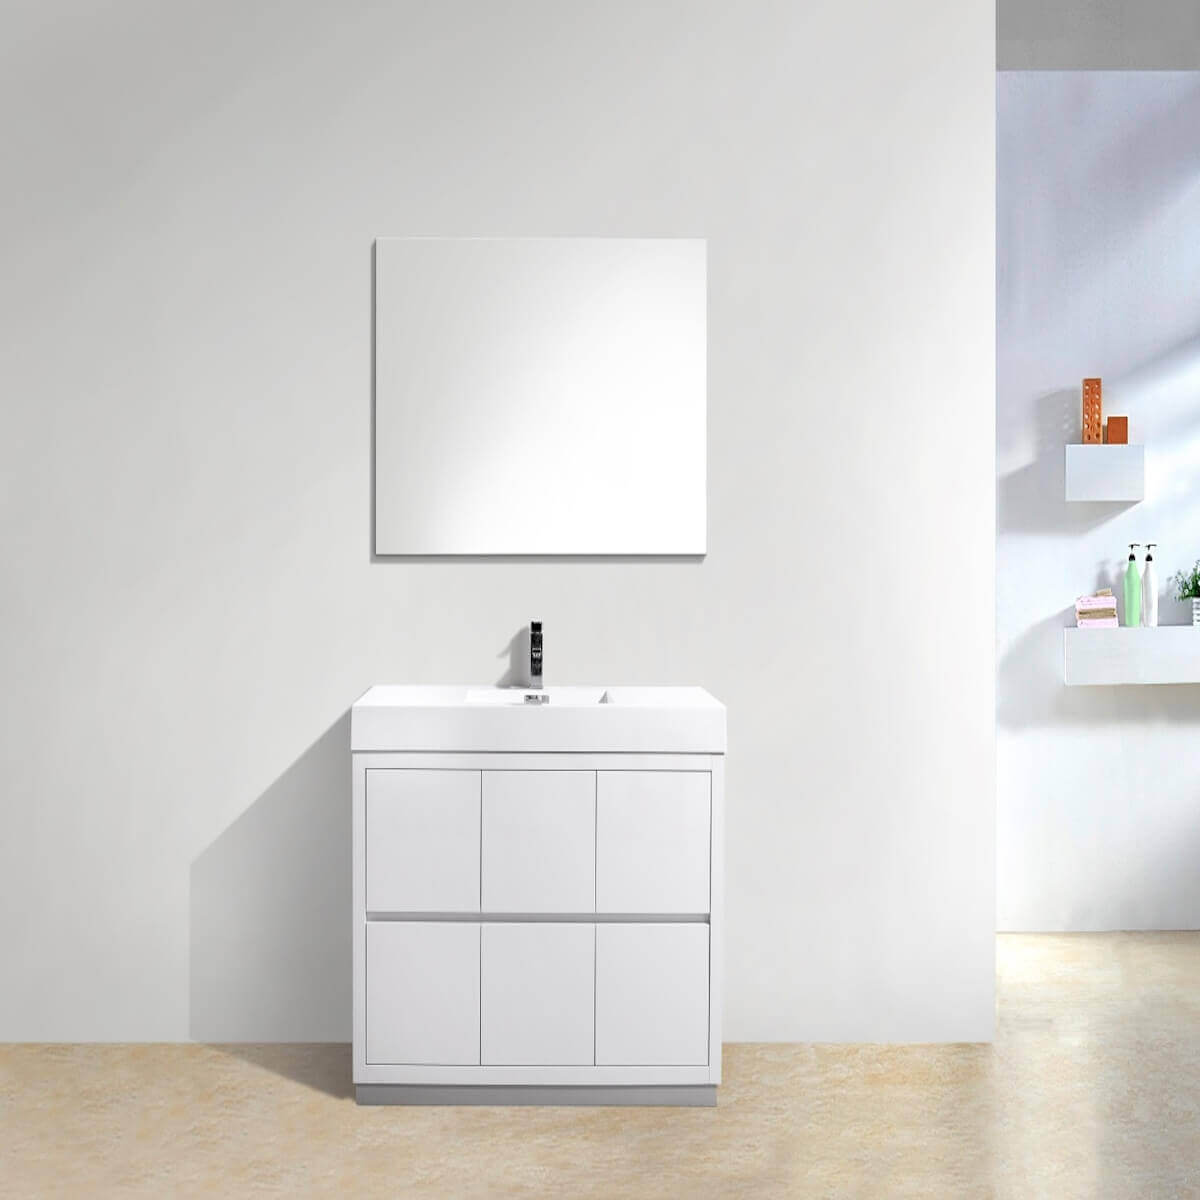 KubeBath Bliss 48" Gloss White Freestanding Single Vanity FMB48GW in Bathroom #finish_gloss white